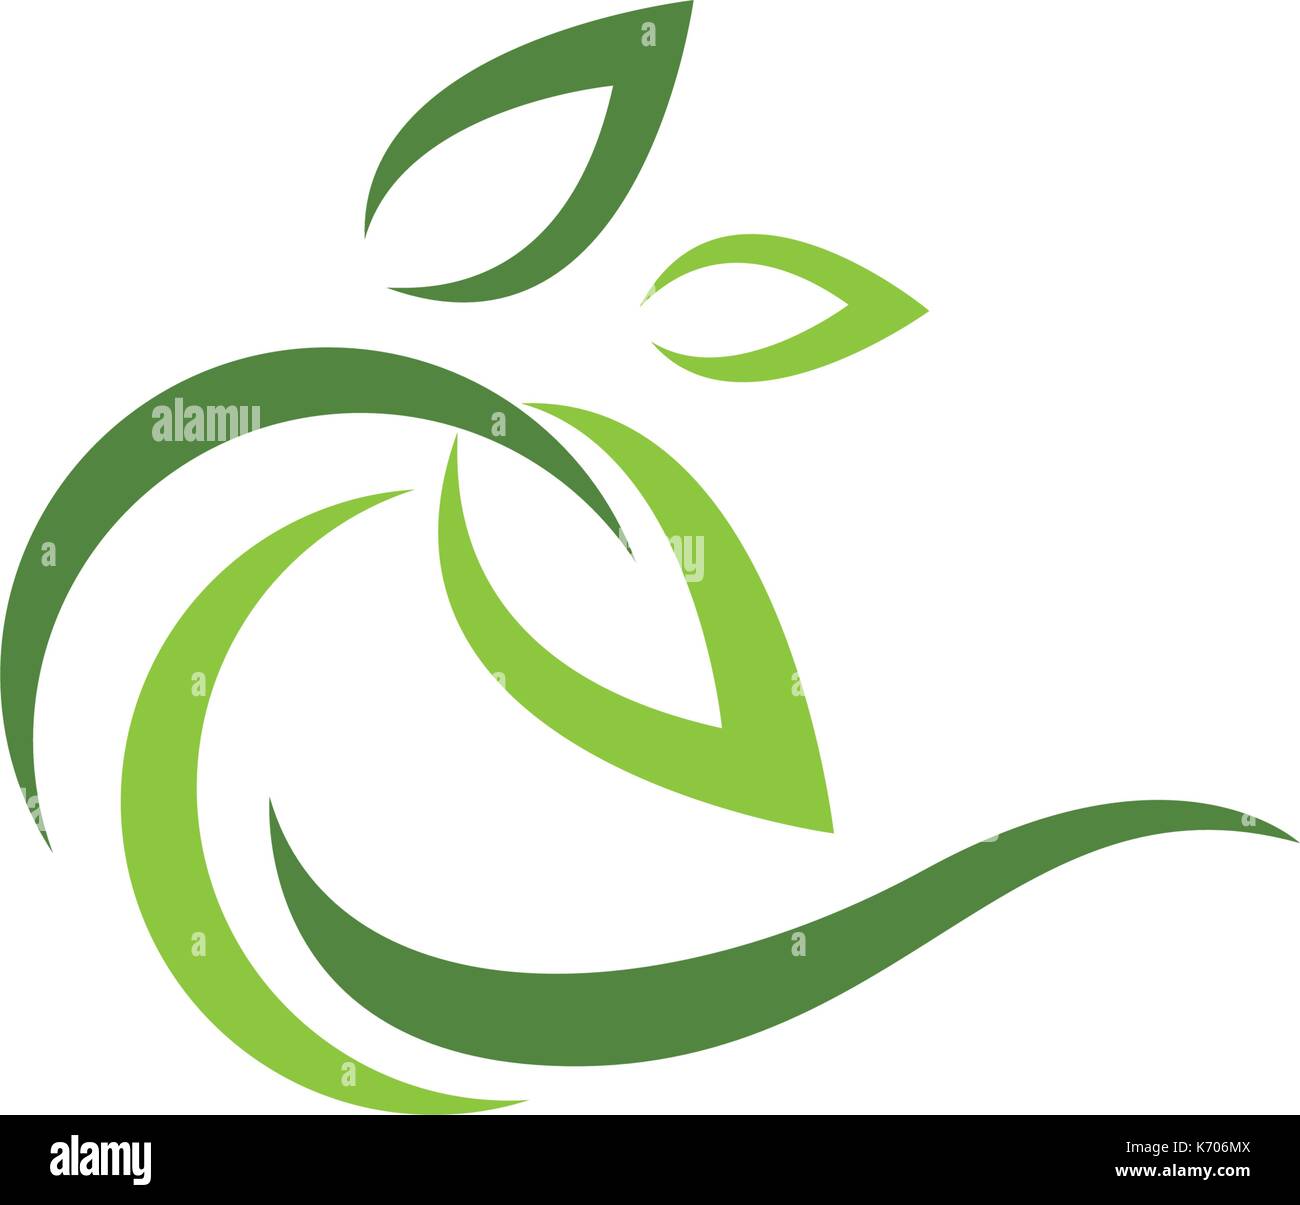 Tree leaf vector logo design, eco-friendly concept. Stock Vector